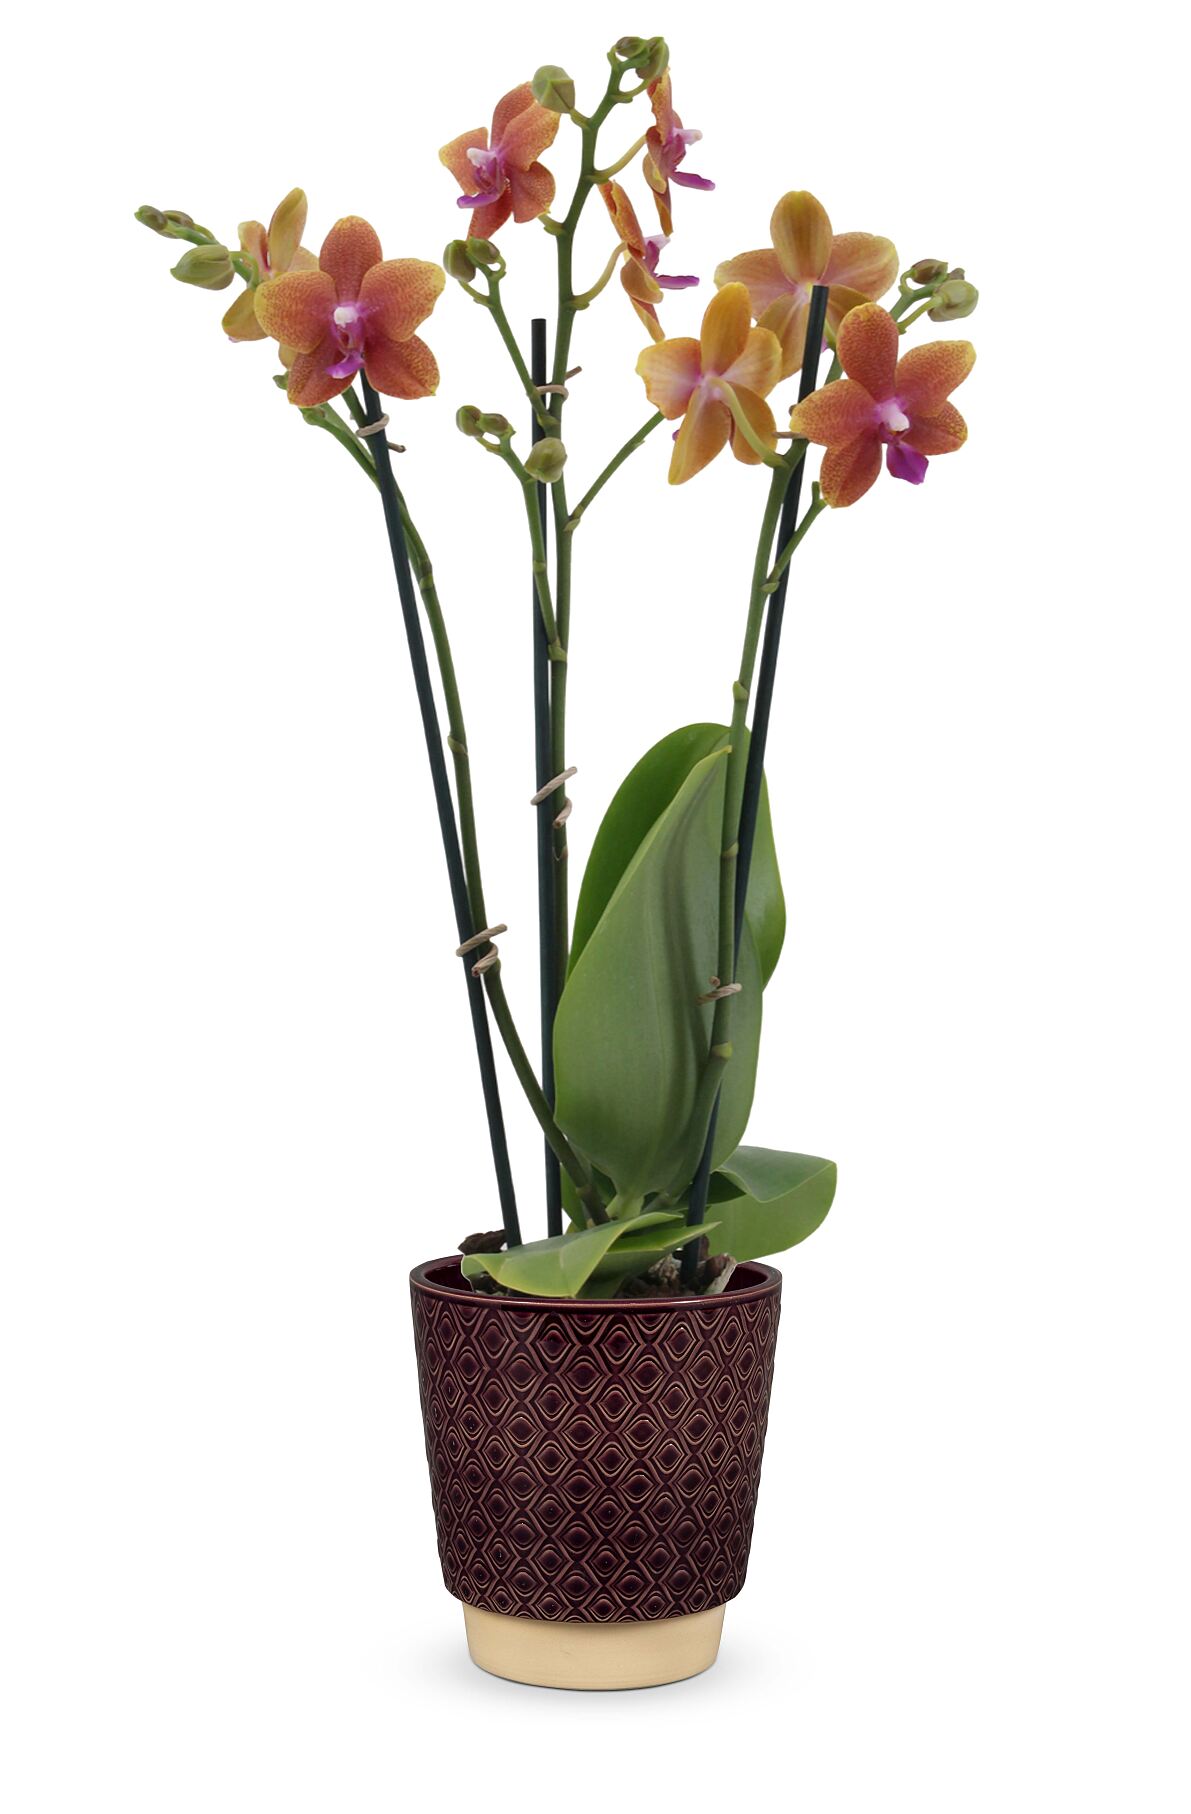 bellaflora_Orchidee Parfum de Provence_€ 21,99